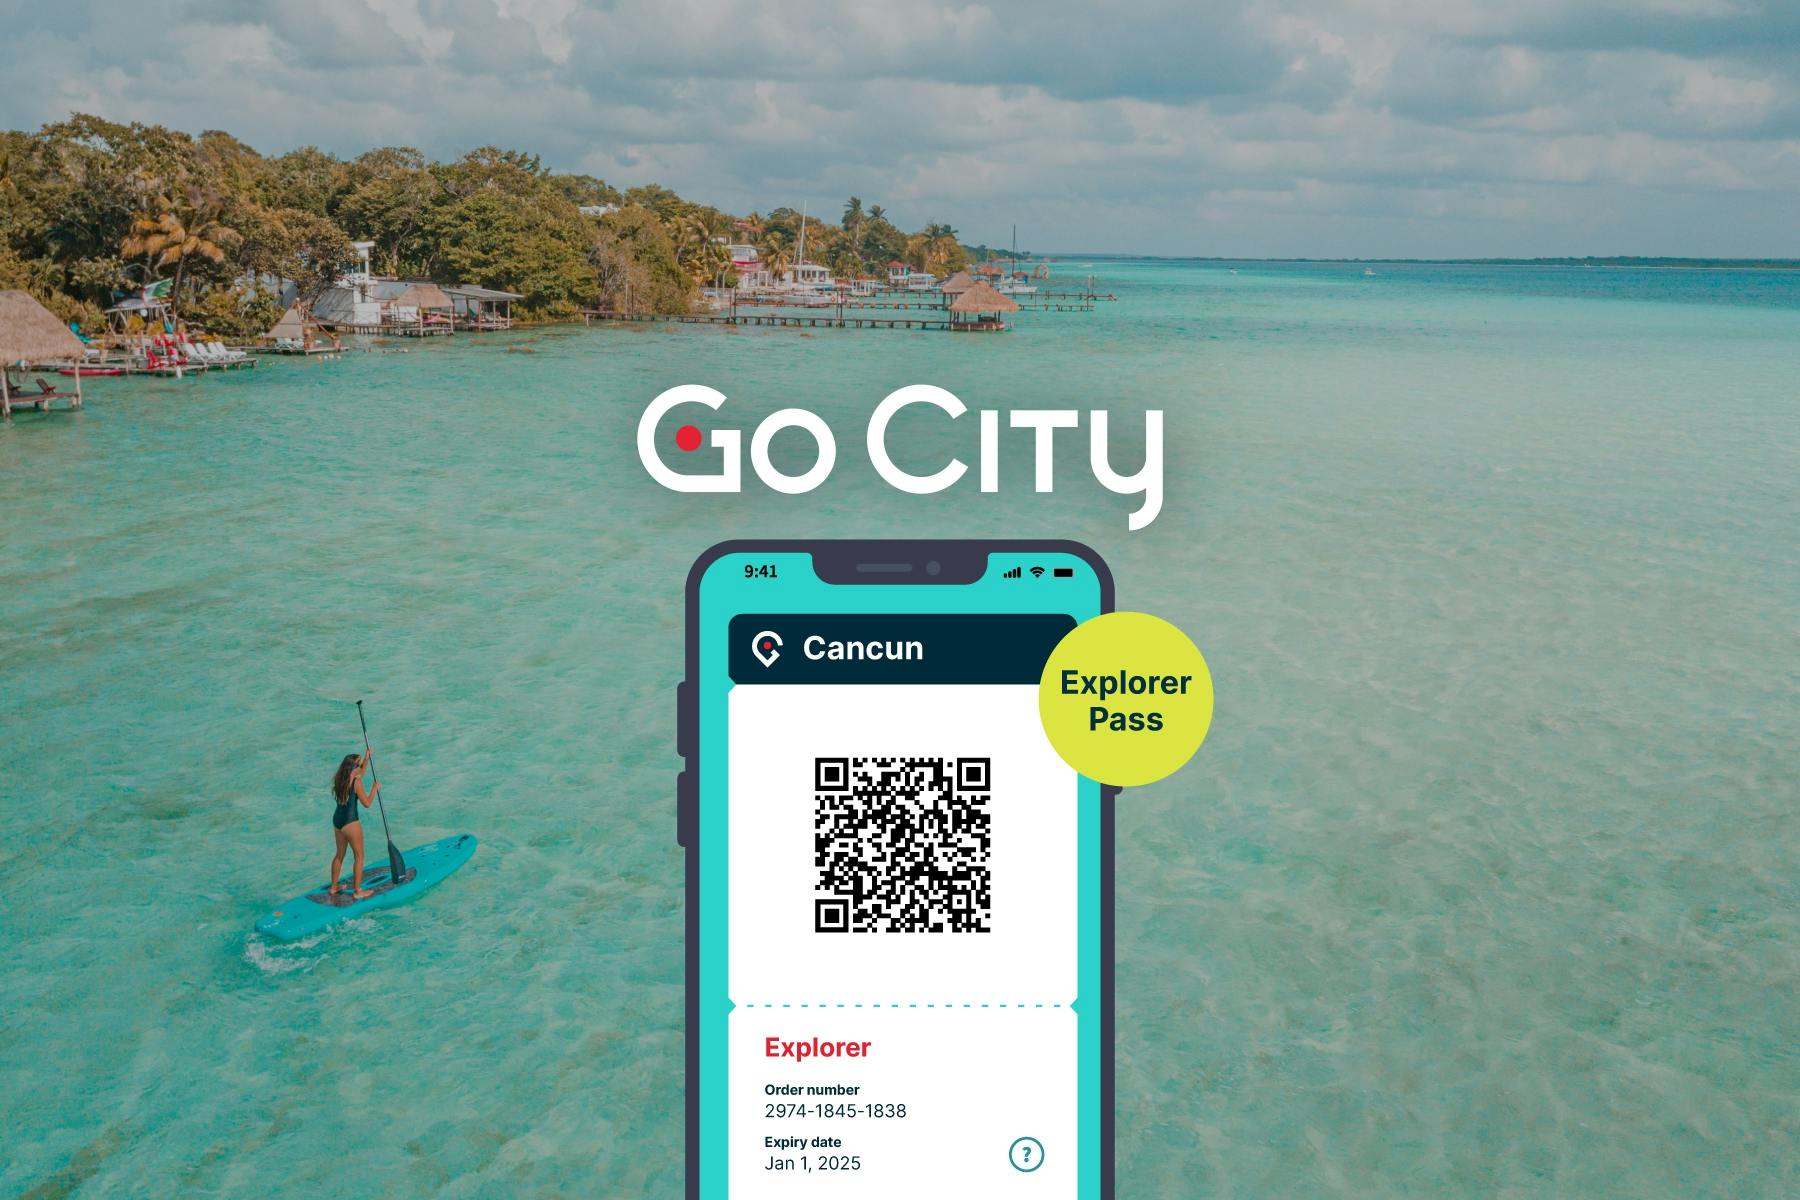 Idź do miasta | Karnet Explorer w Cancun